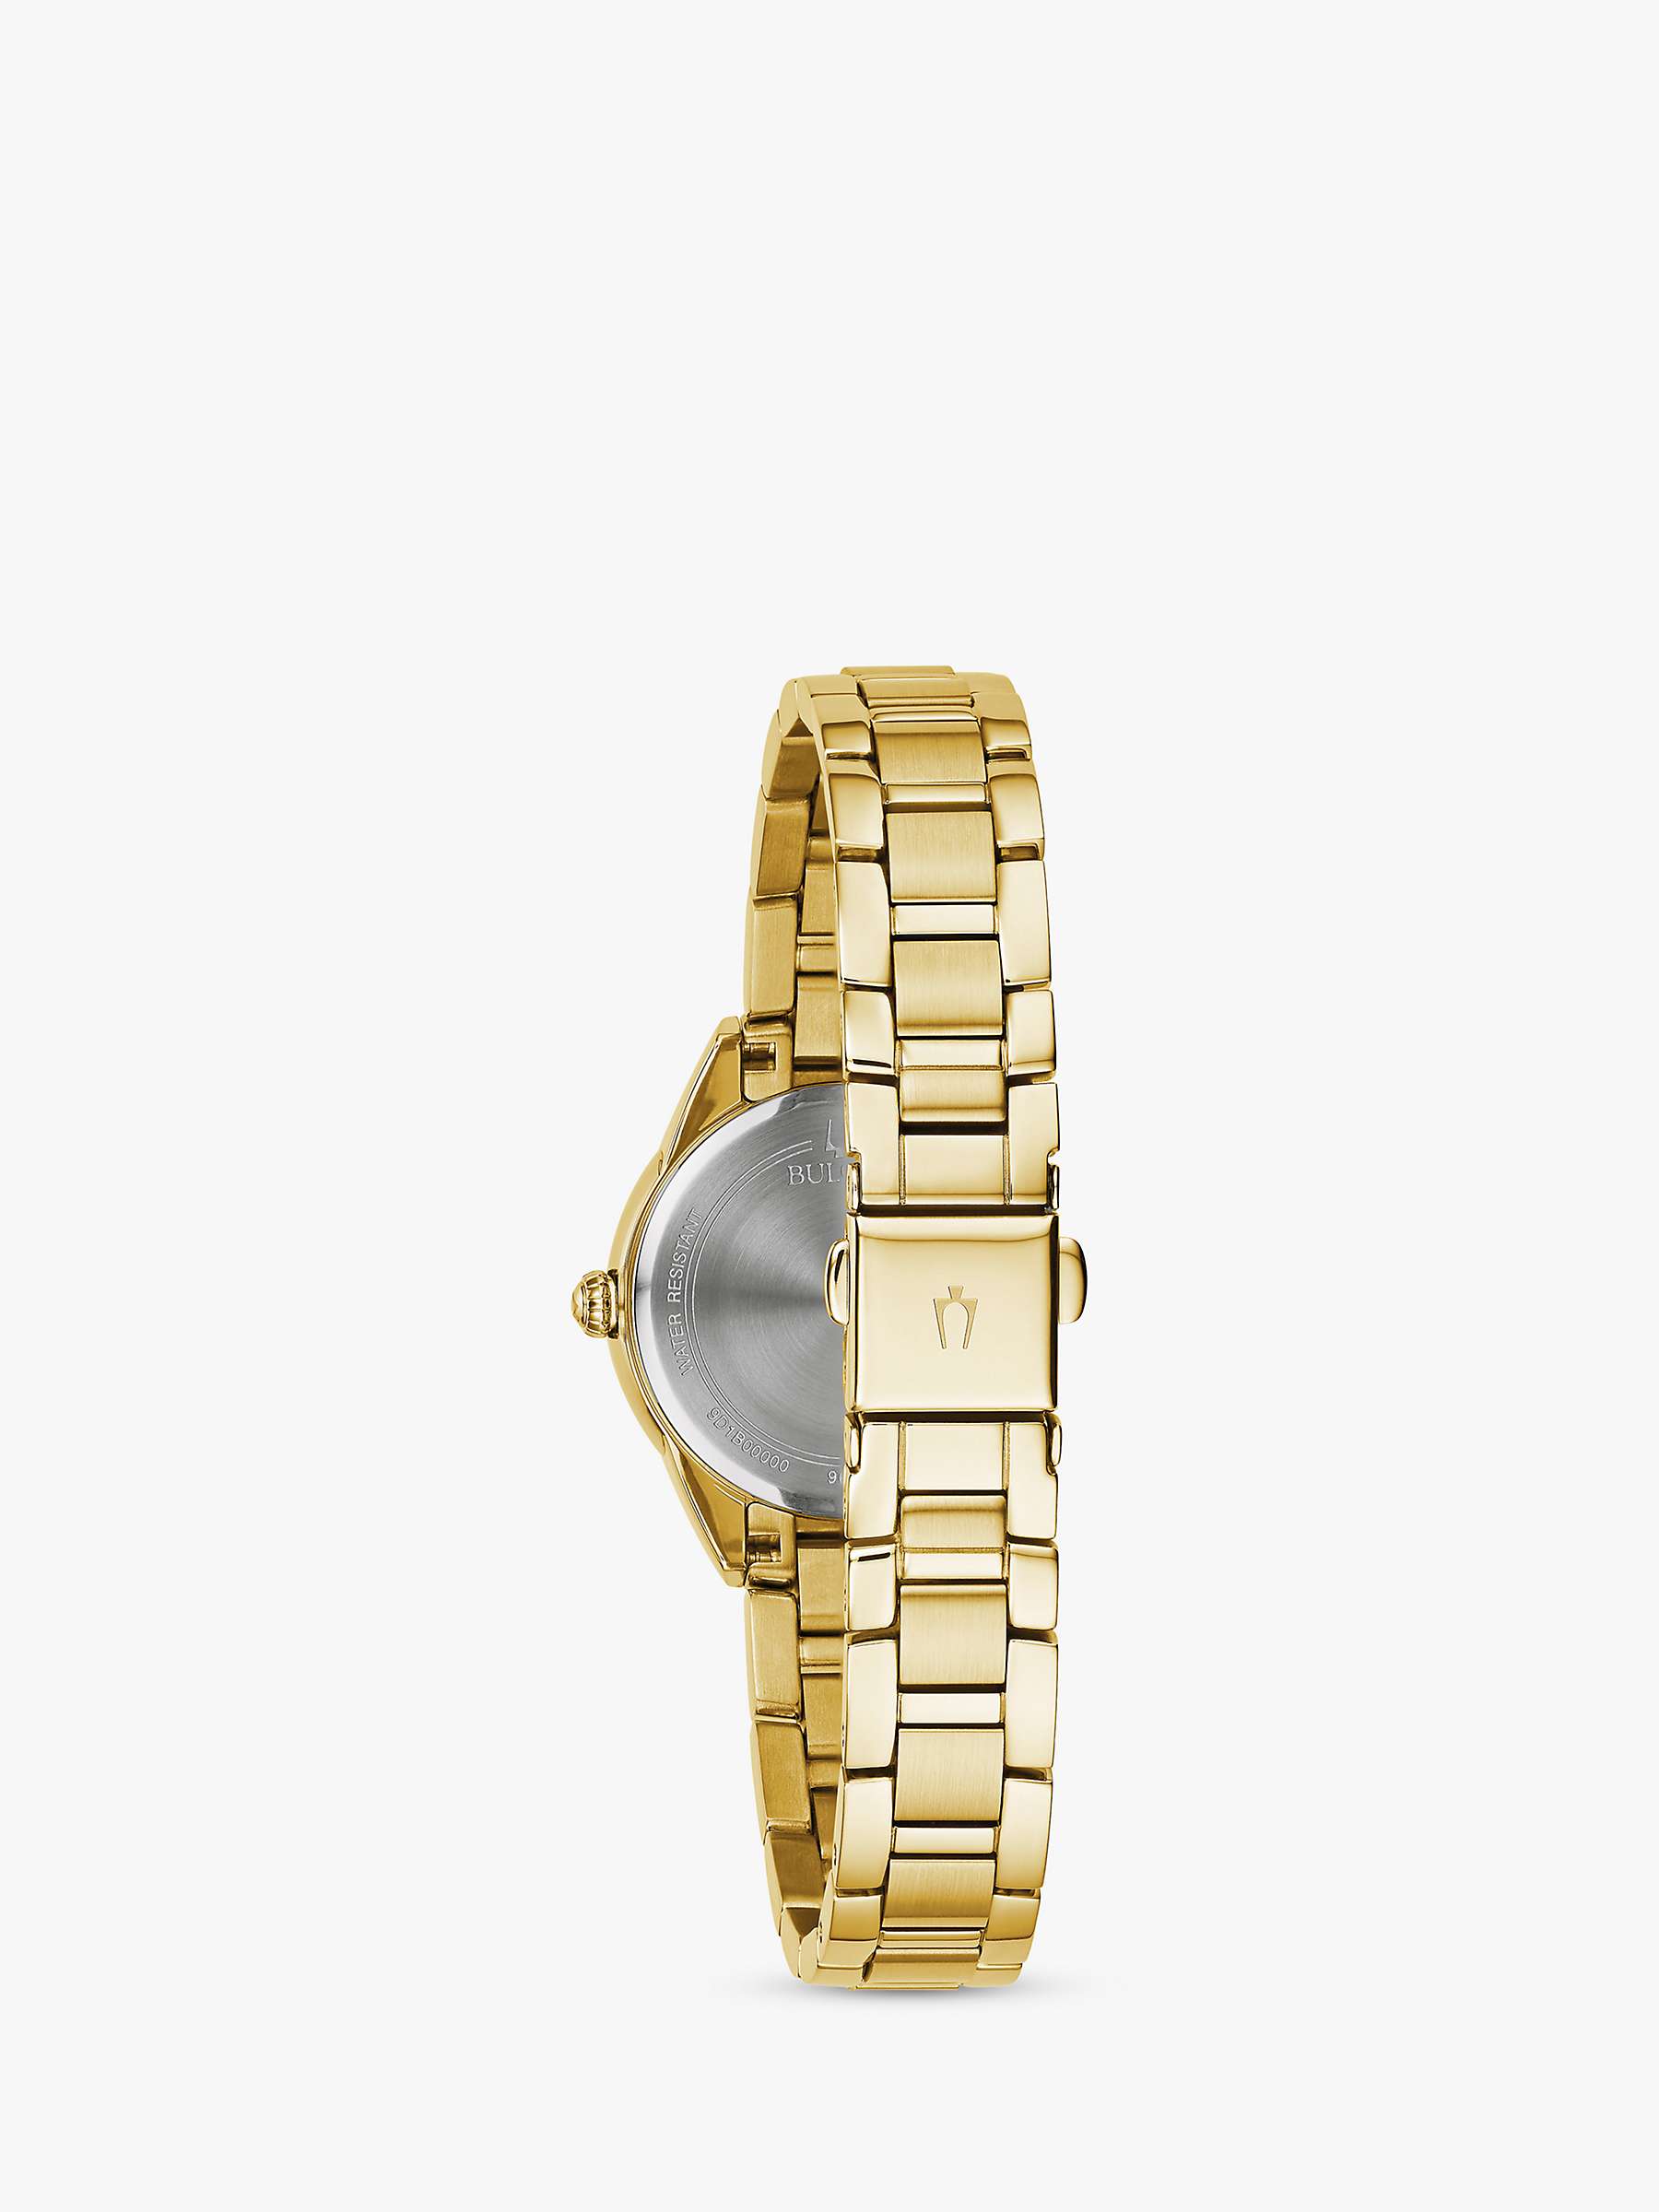 Bulova Gold Watch: Timeless Elegance and Luxury - Everything-Diamond